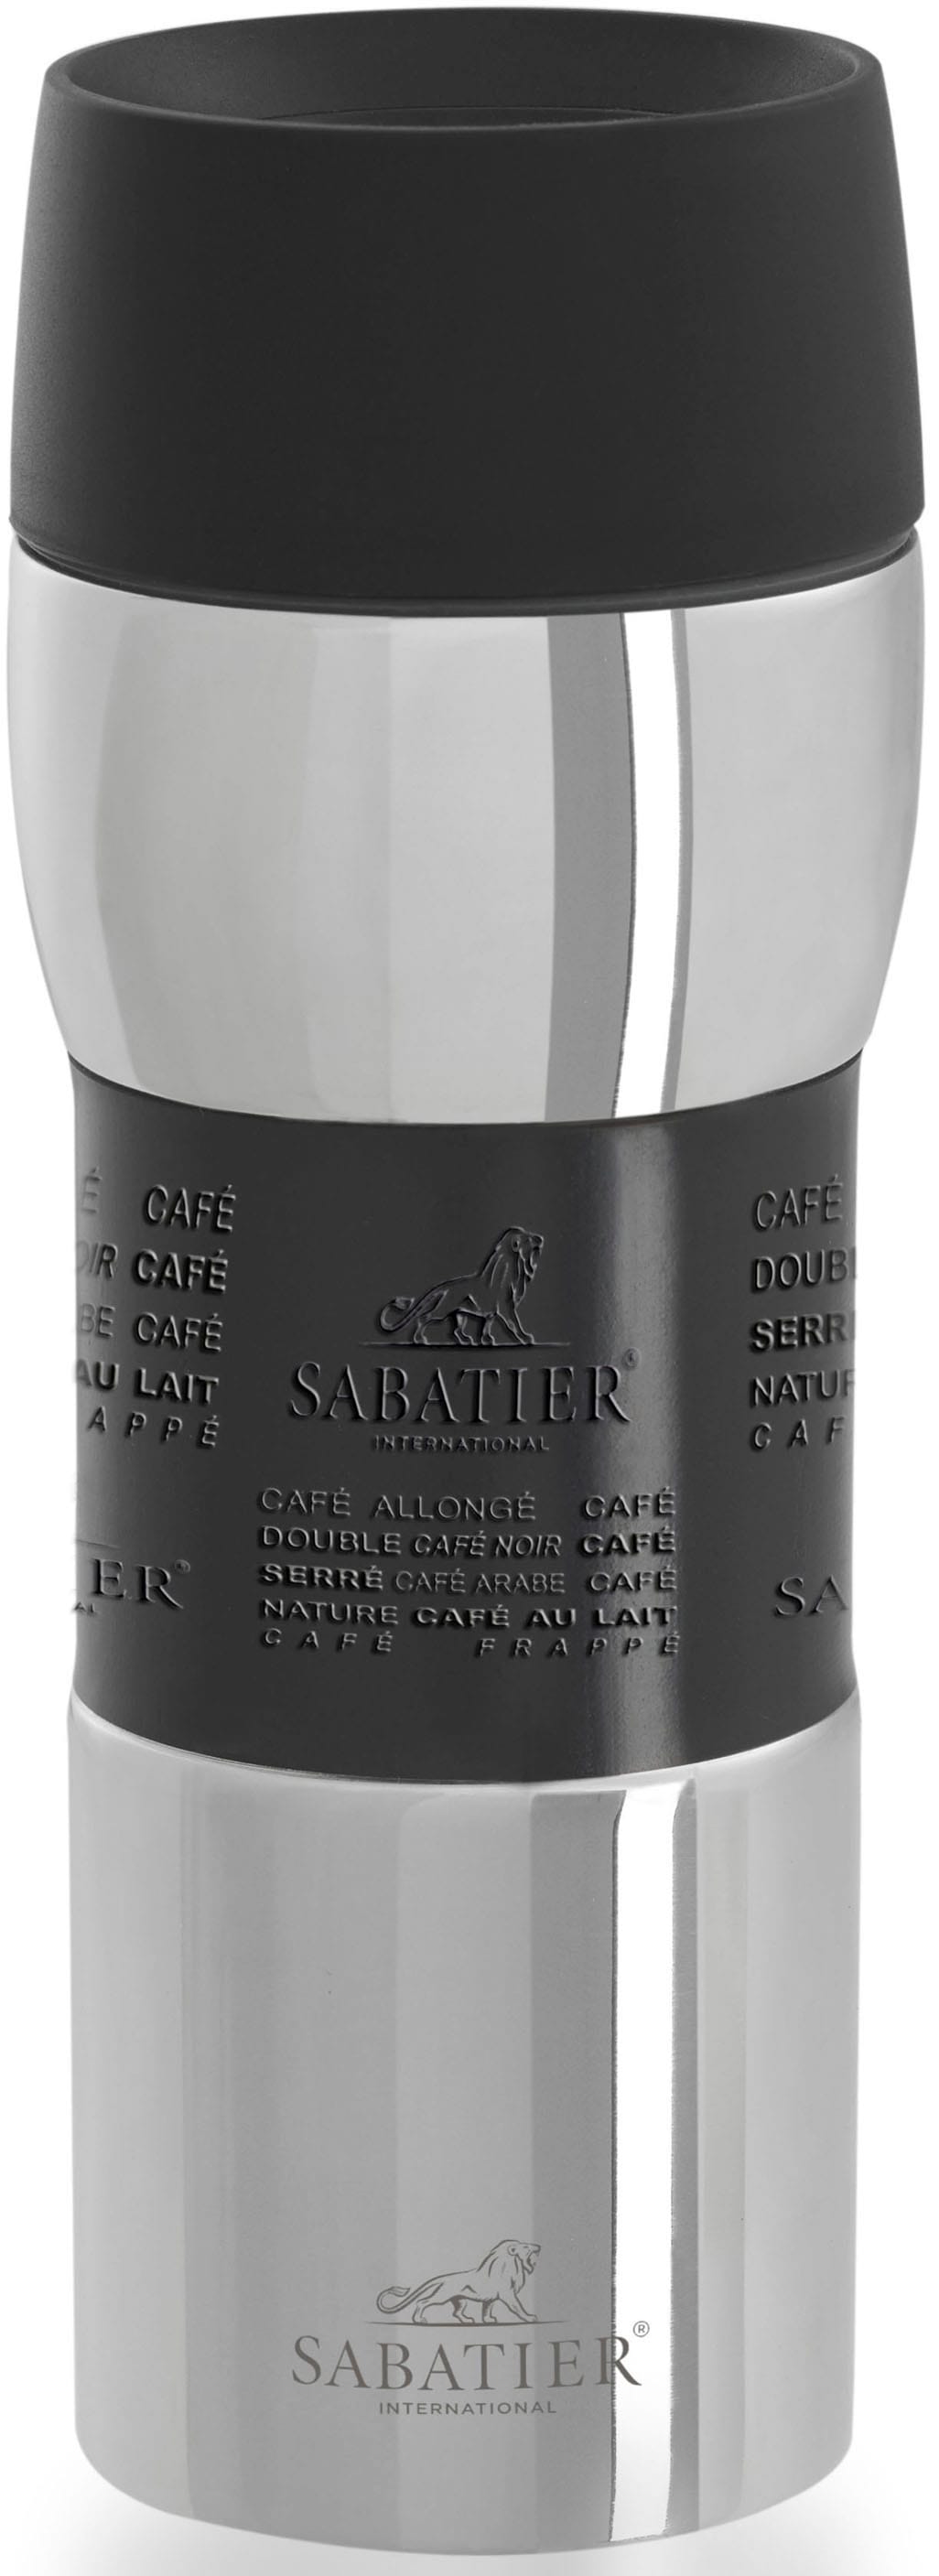 BAUR tlg., International Thermobecher, 1 ml (1 SABATIER | 450 x Thermo-Trinkbecher),